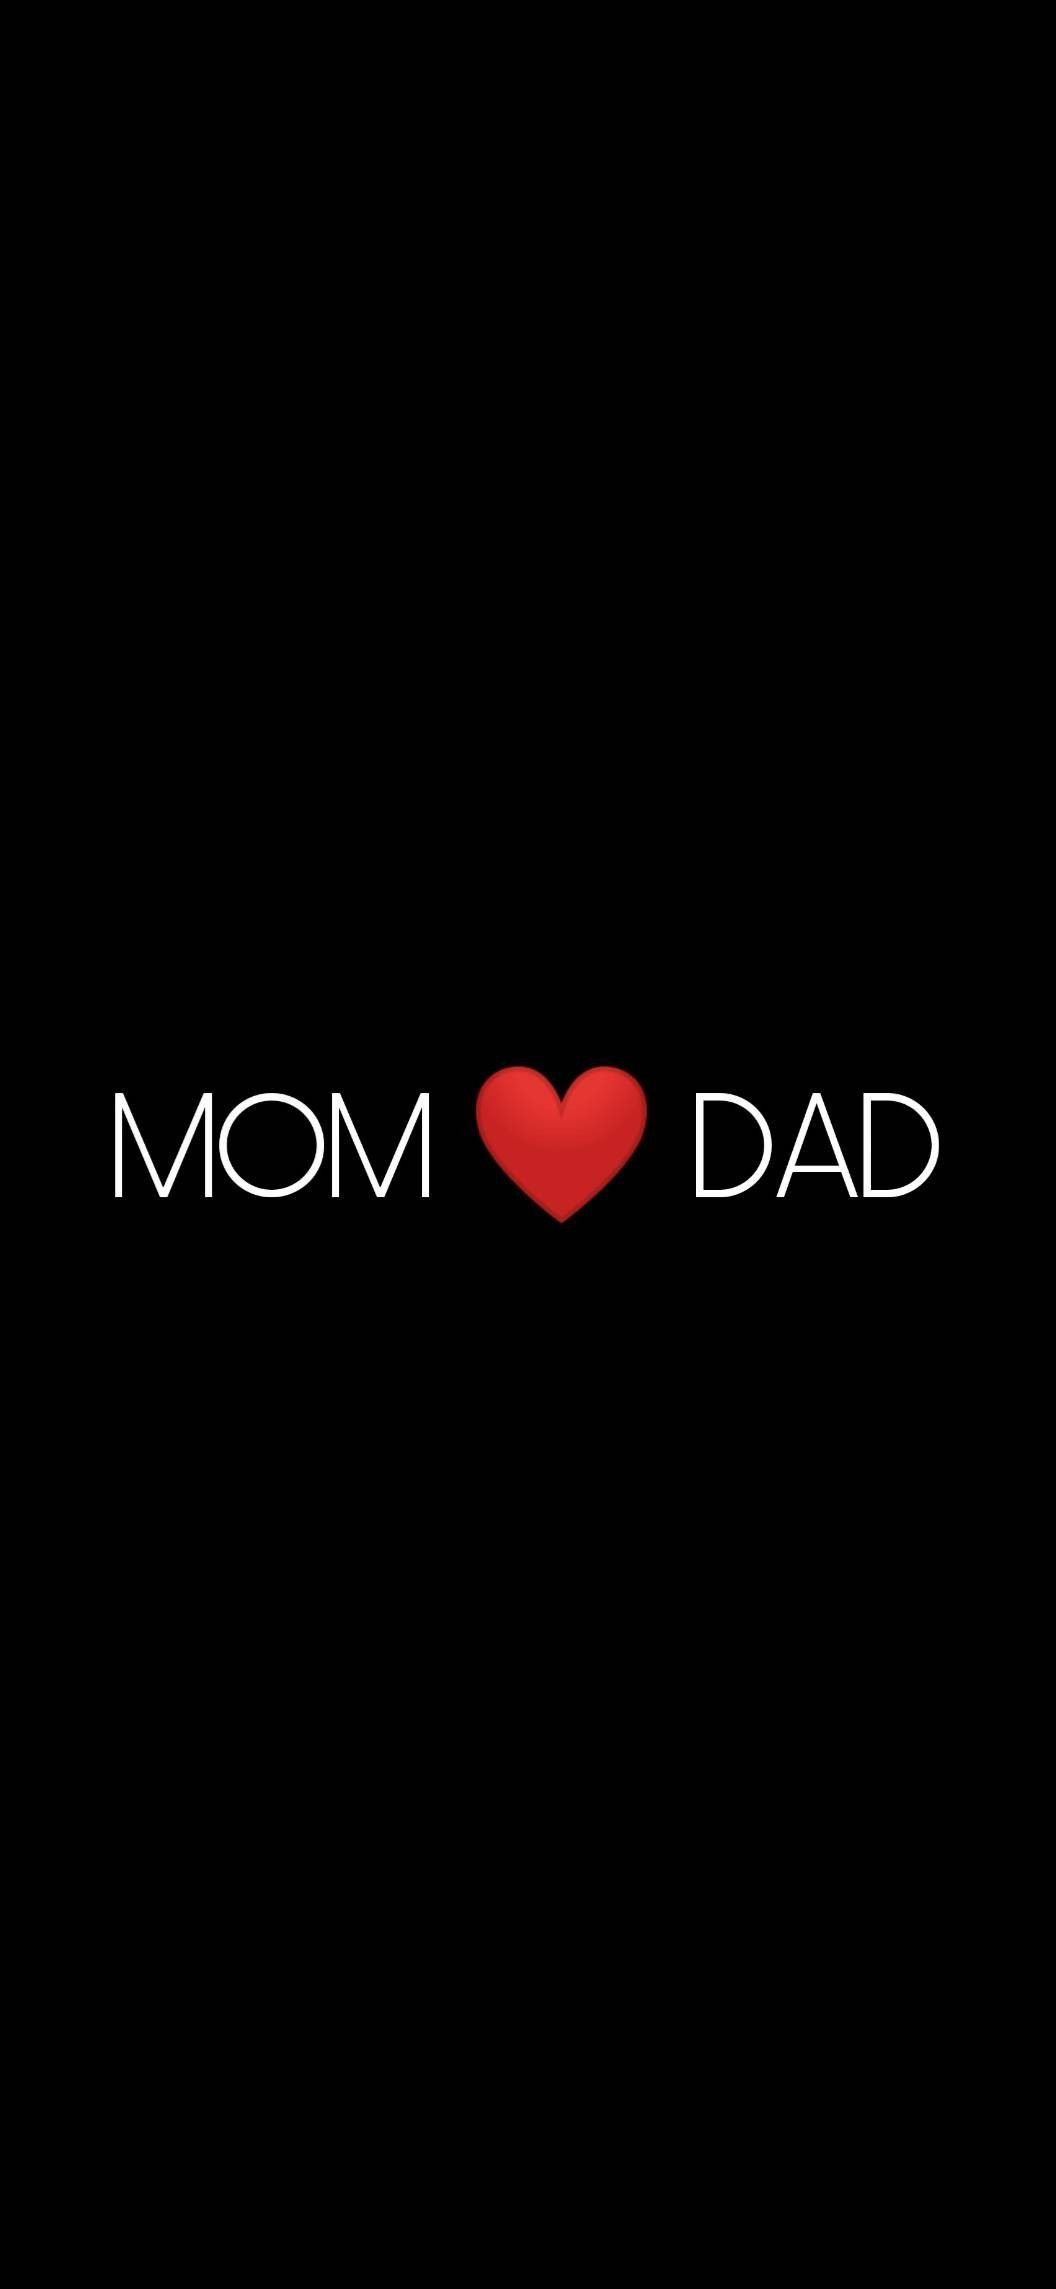 Mom Dad - Love | Black Background